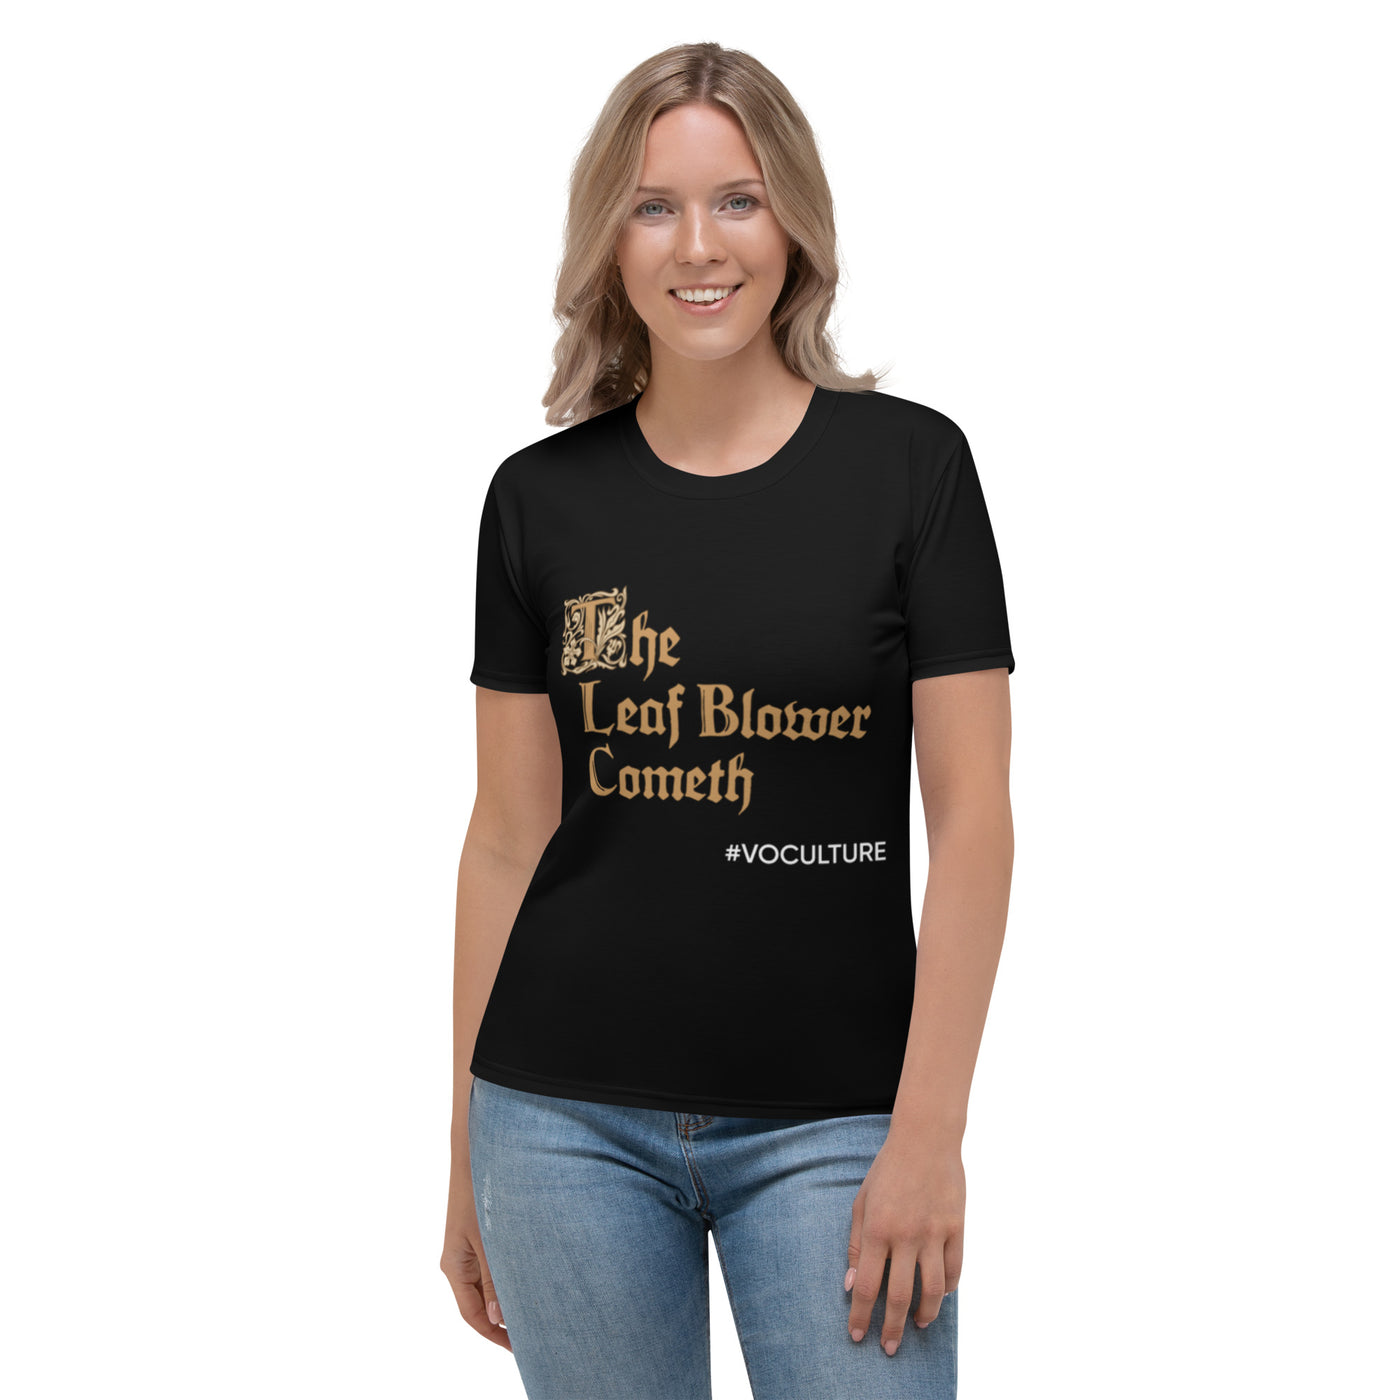 THE LEAF BLOWER COMETH! Women's T-shirt black